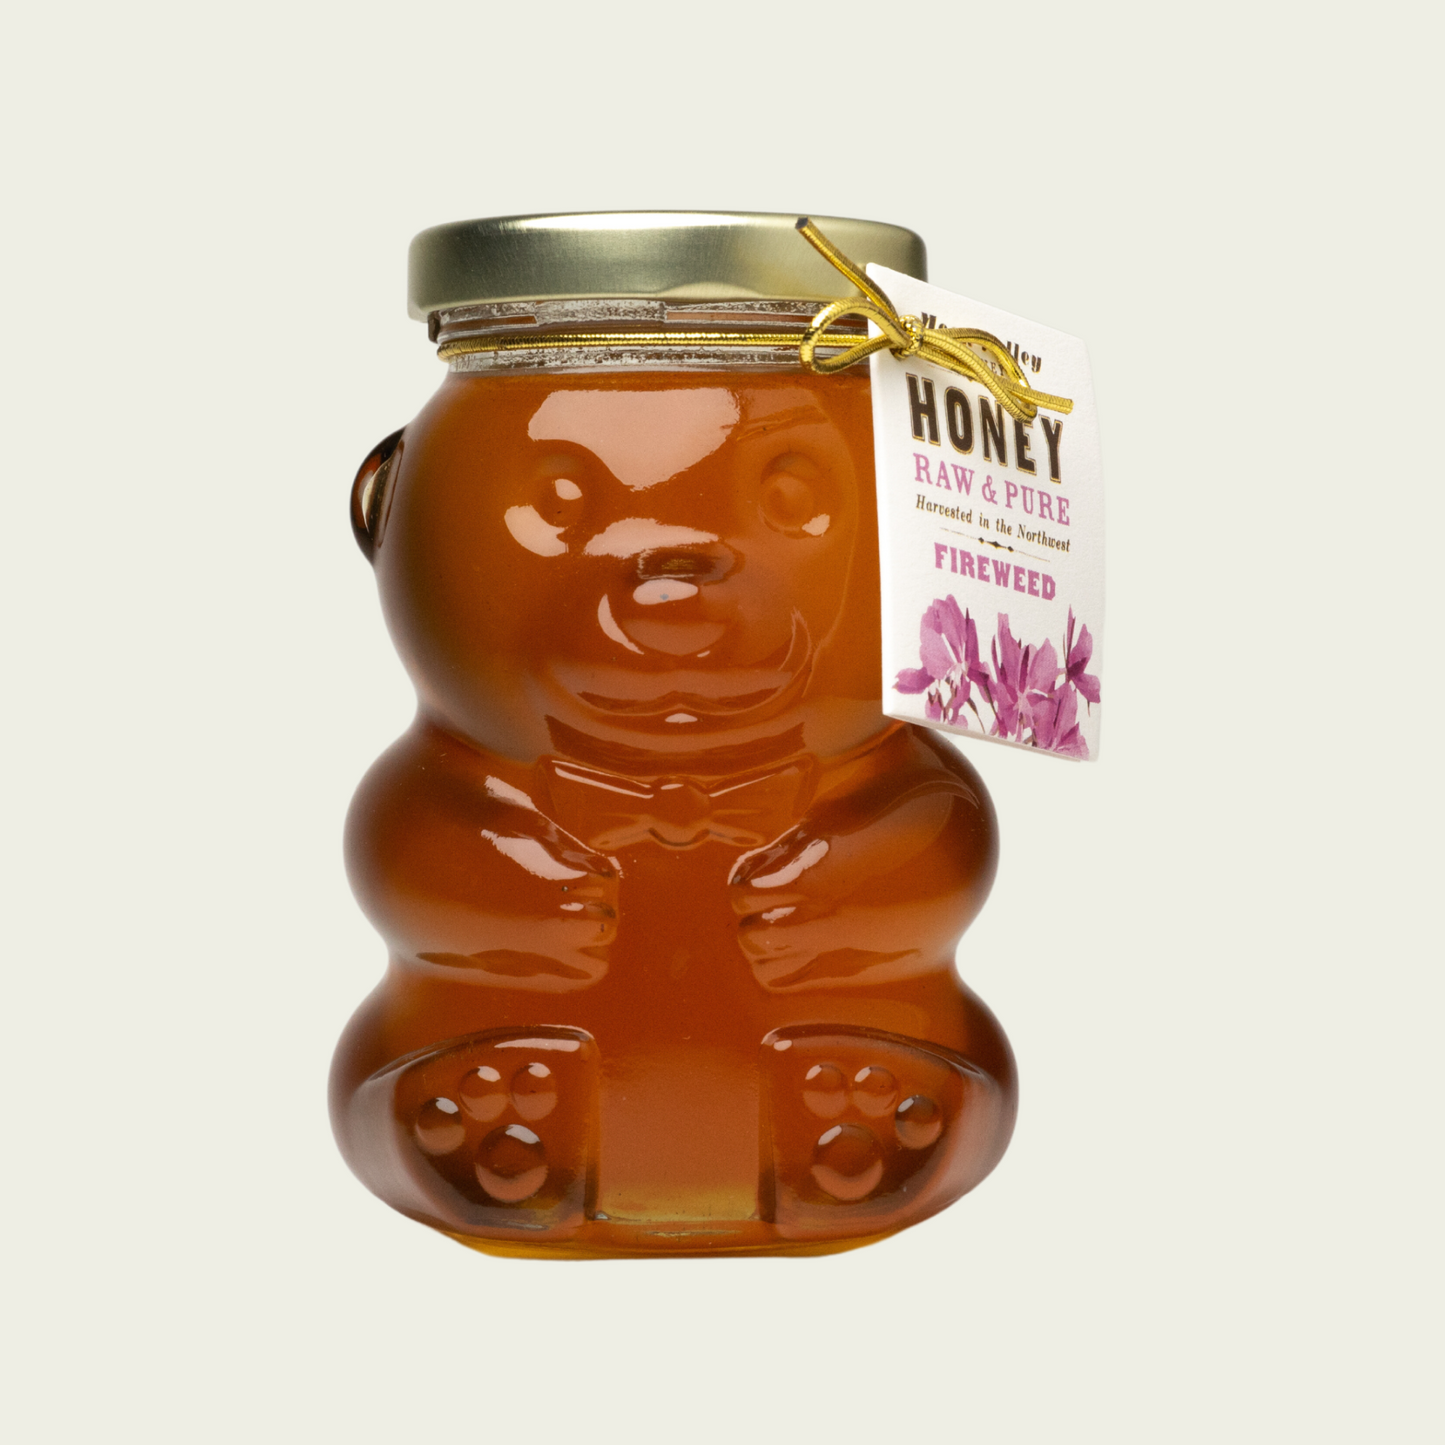 Moon Valley Organics Adorable Glass Honey Bear Fireweed